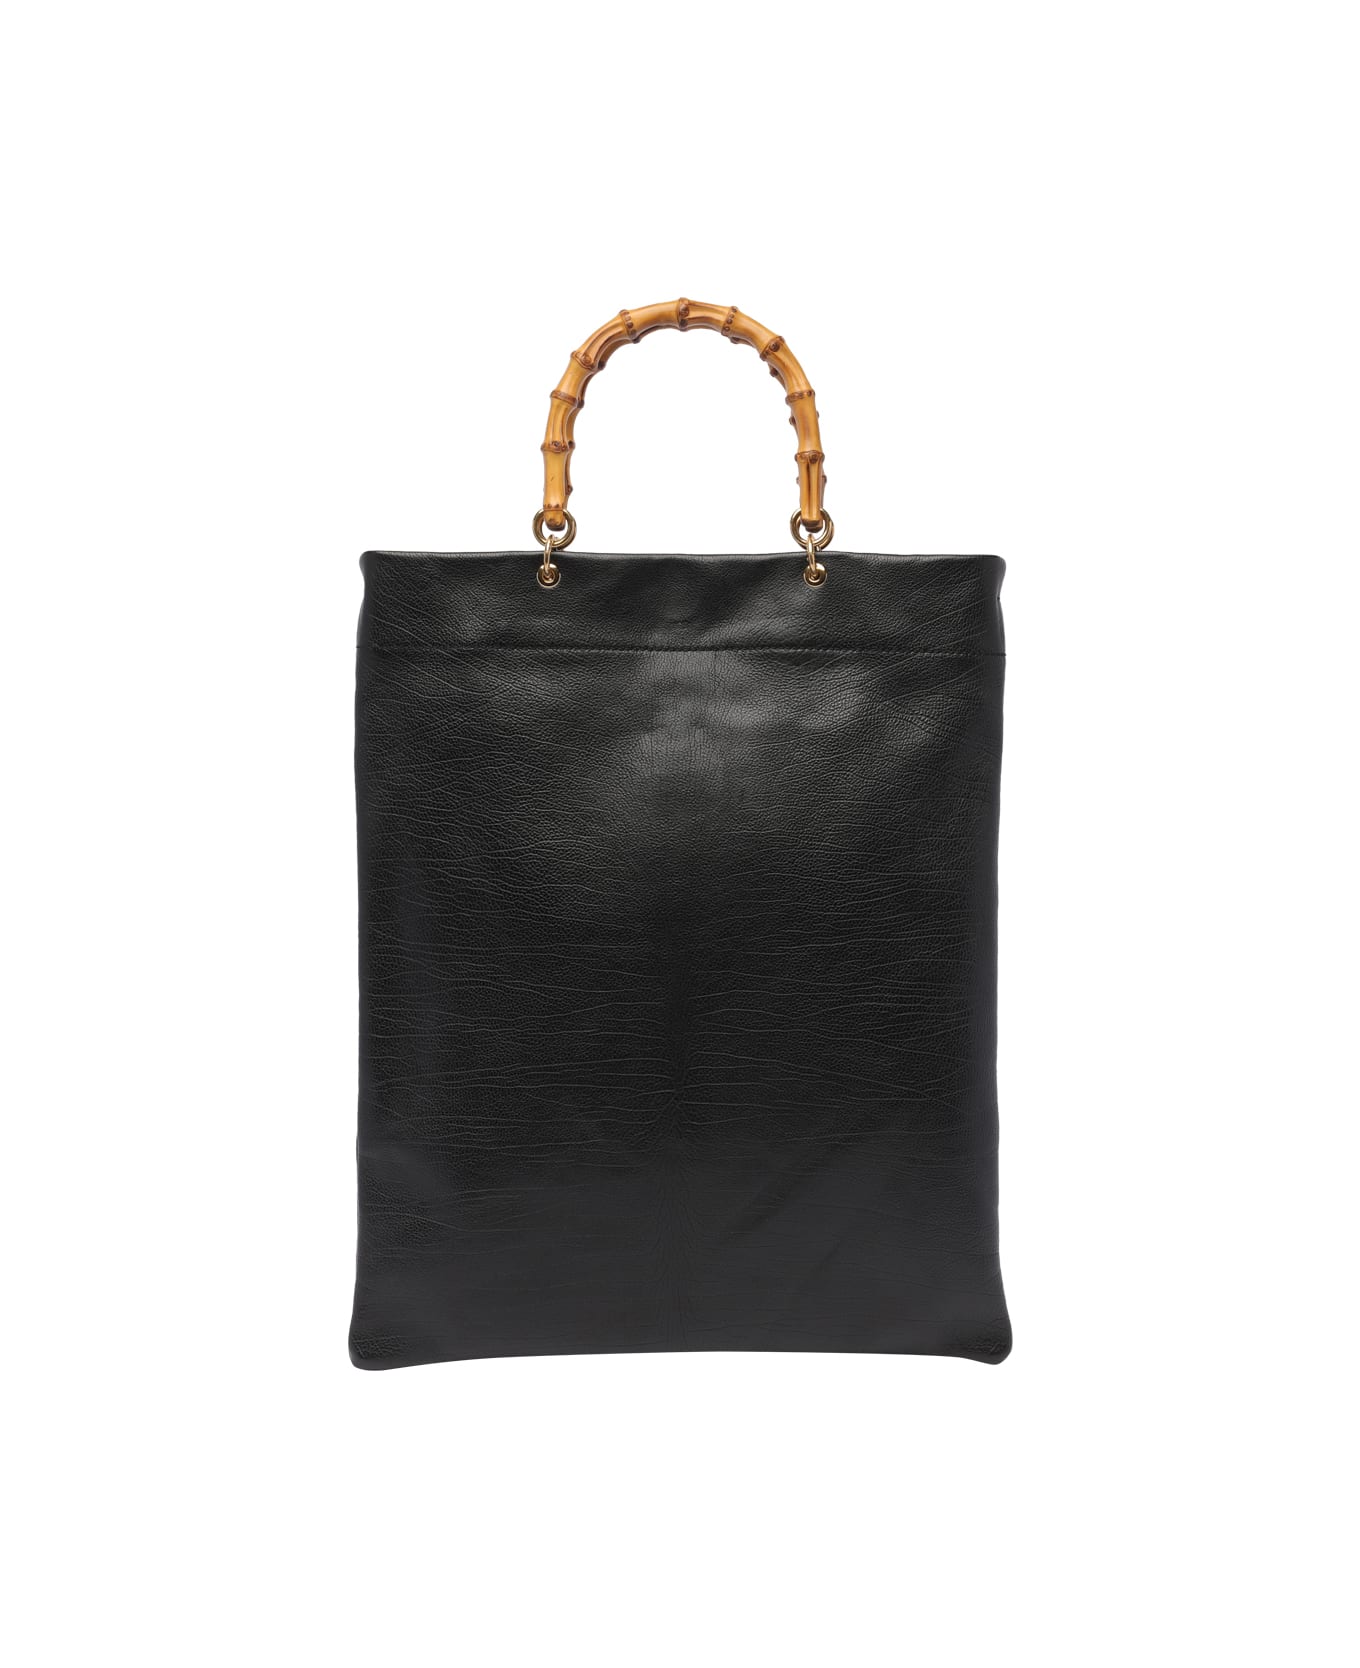 Jil Sander Medium Tote Bag - Black